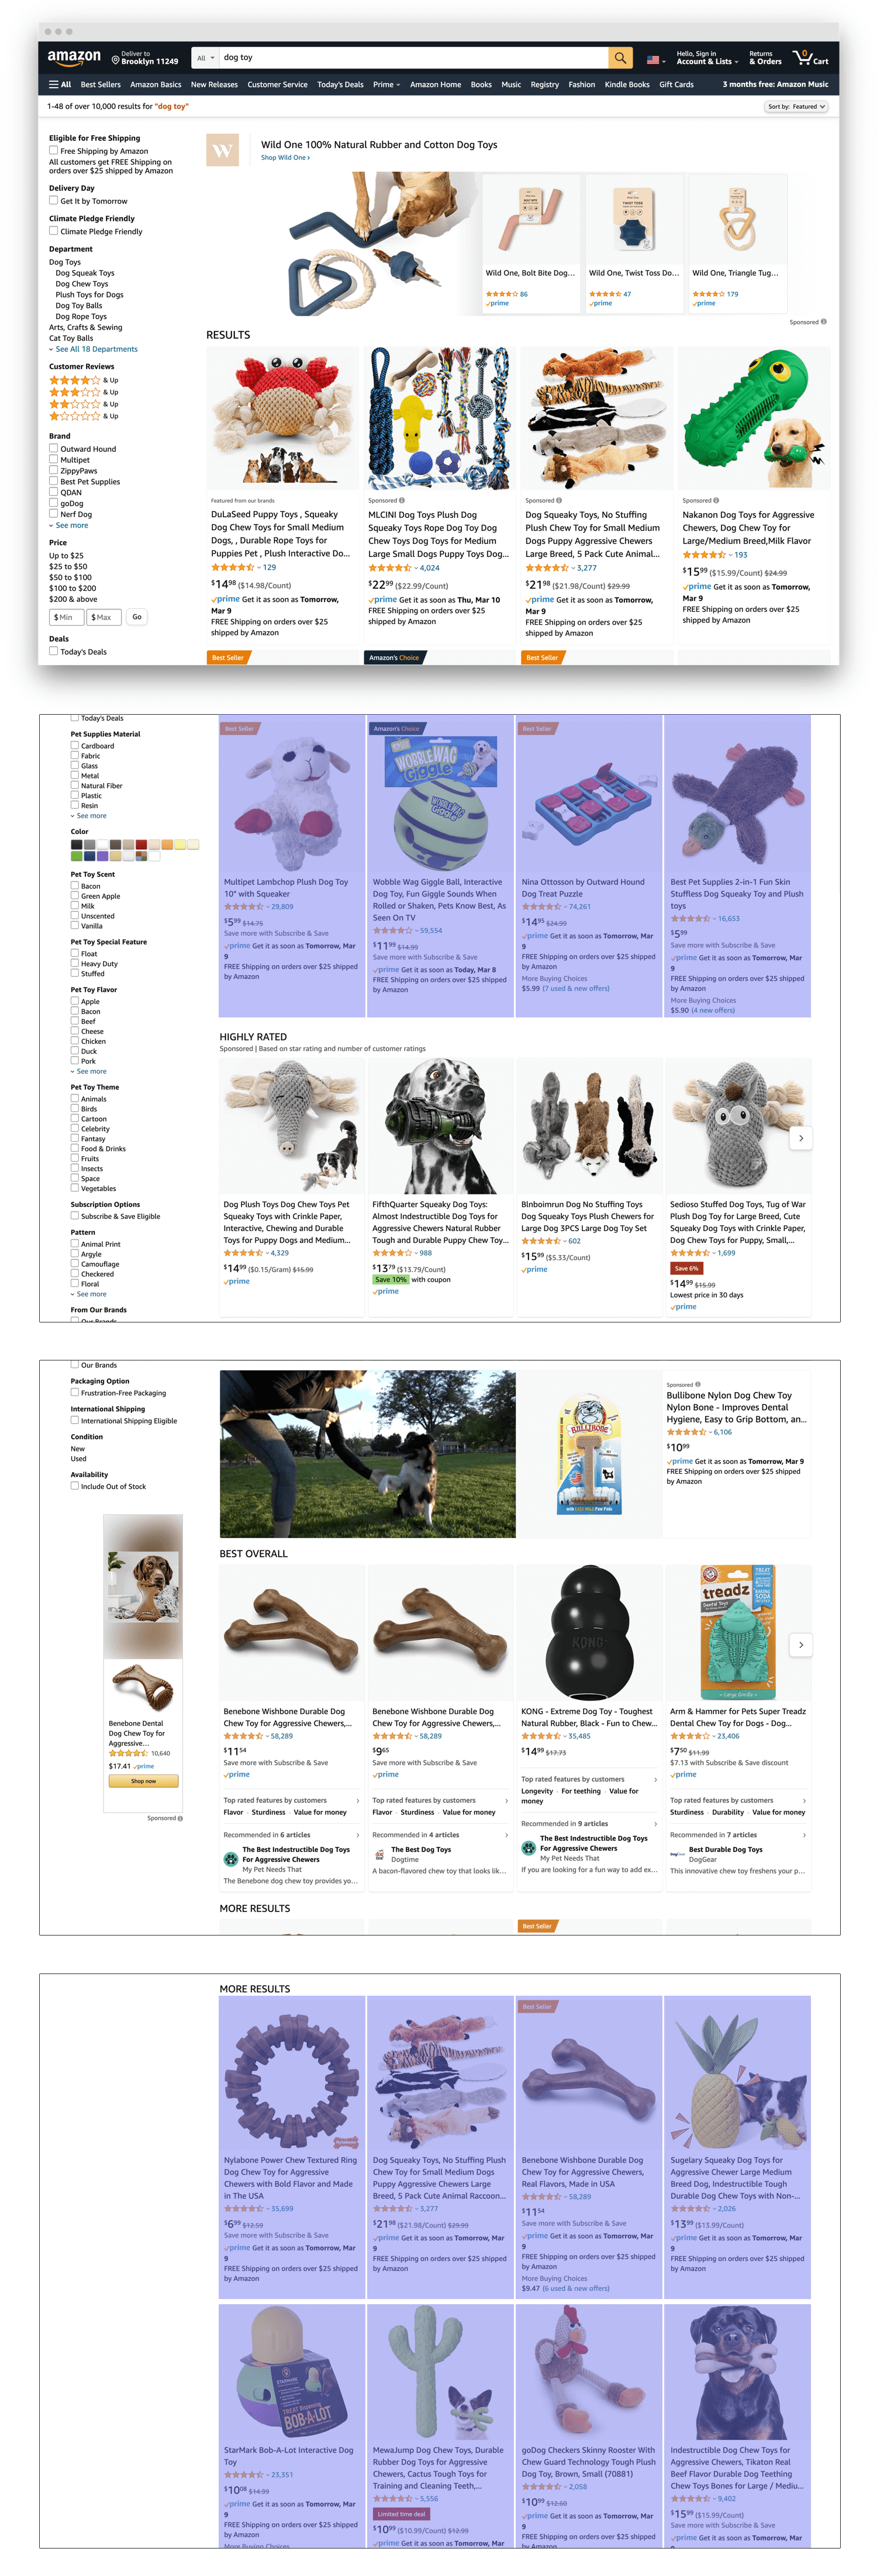 Amazon organic search results